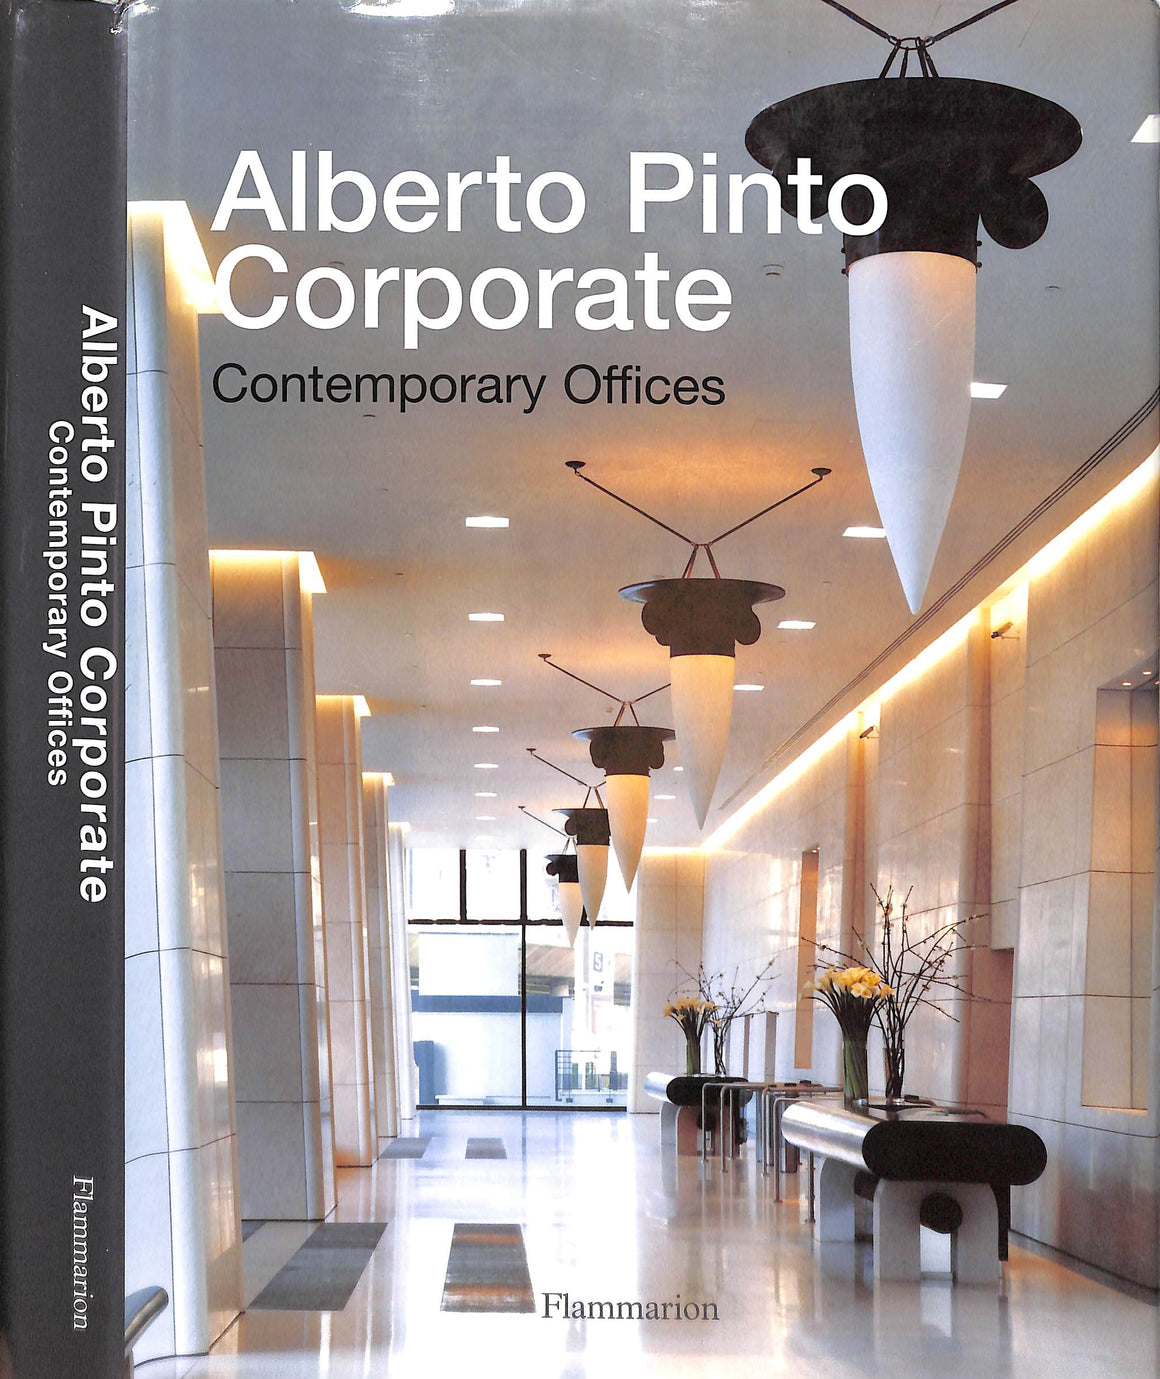 "Alberto Pinto Corporate: Contemporary Offices" 2005 RENAUD, Philippe [editor]